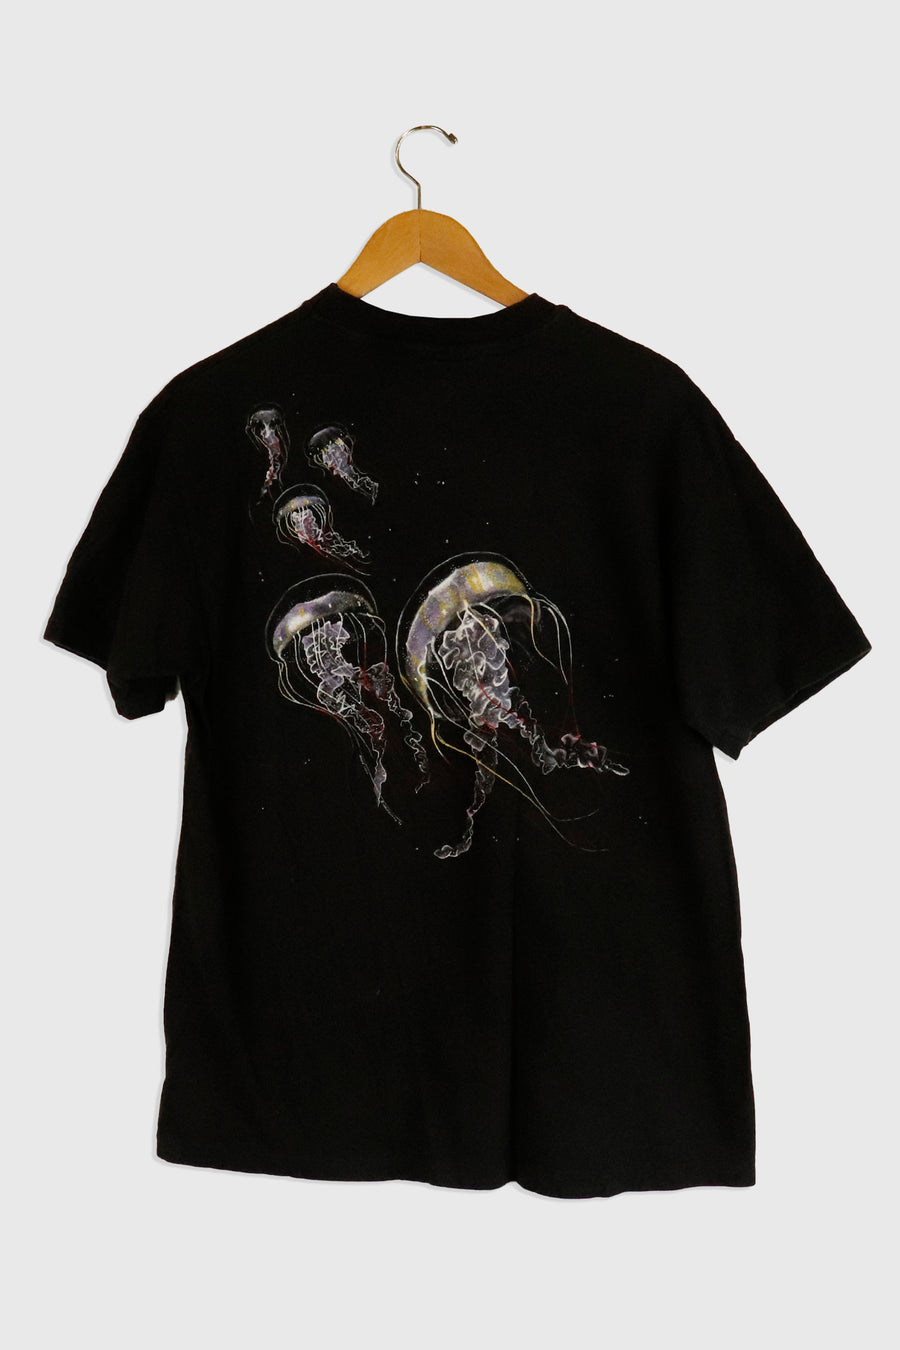 Vintage Monterey Bay Aquarium Jellyfish T Shirt Sz L